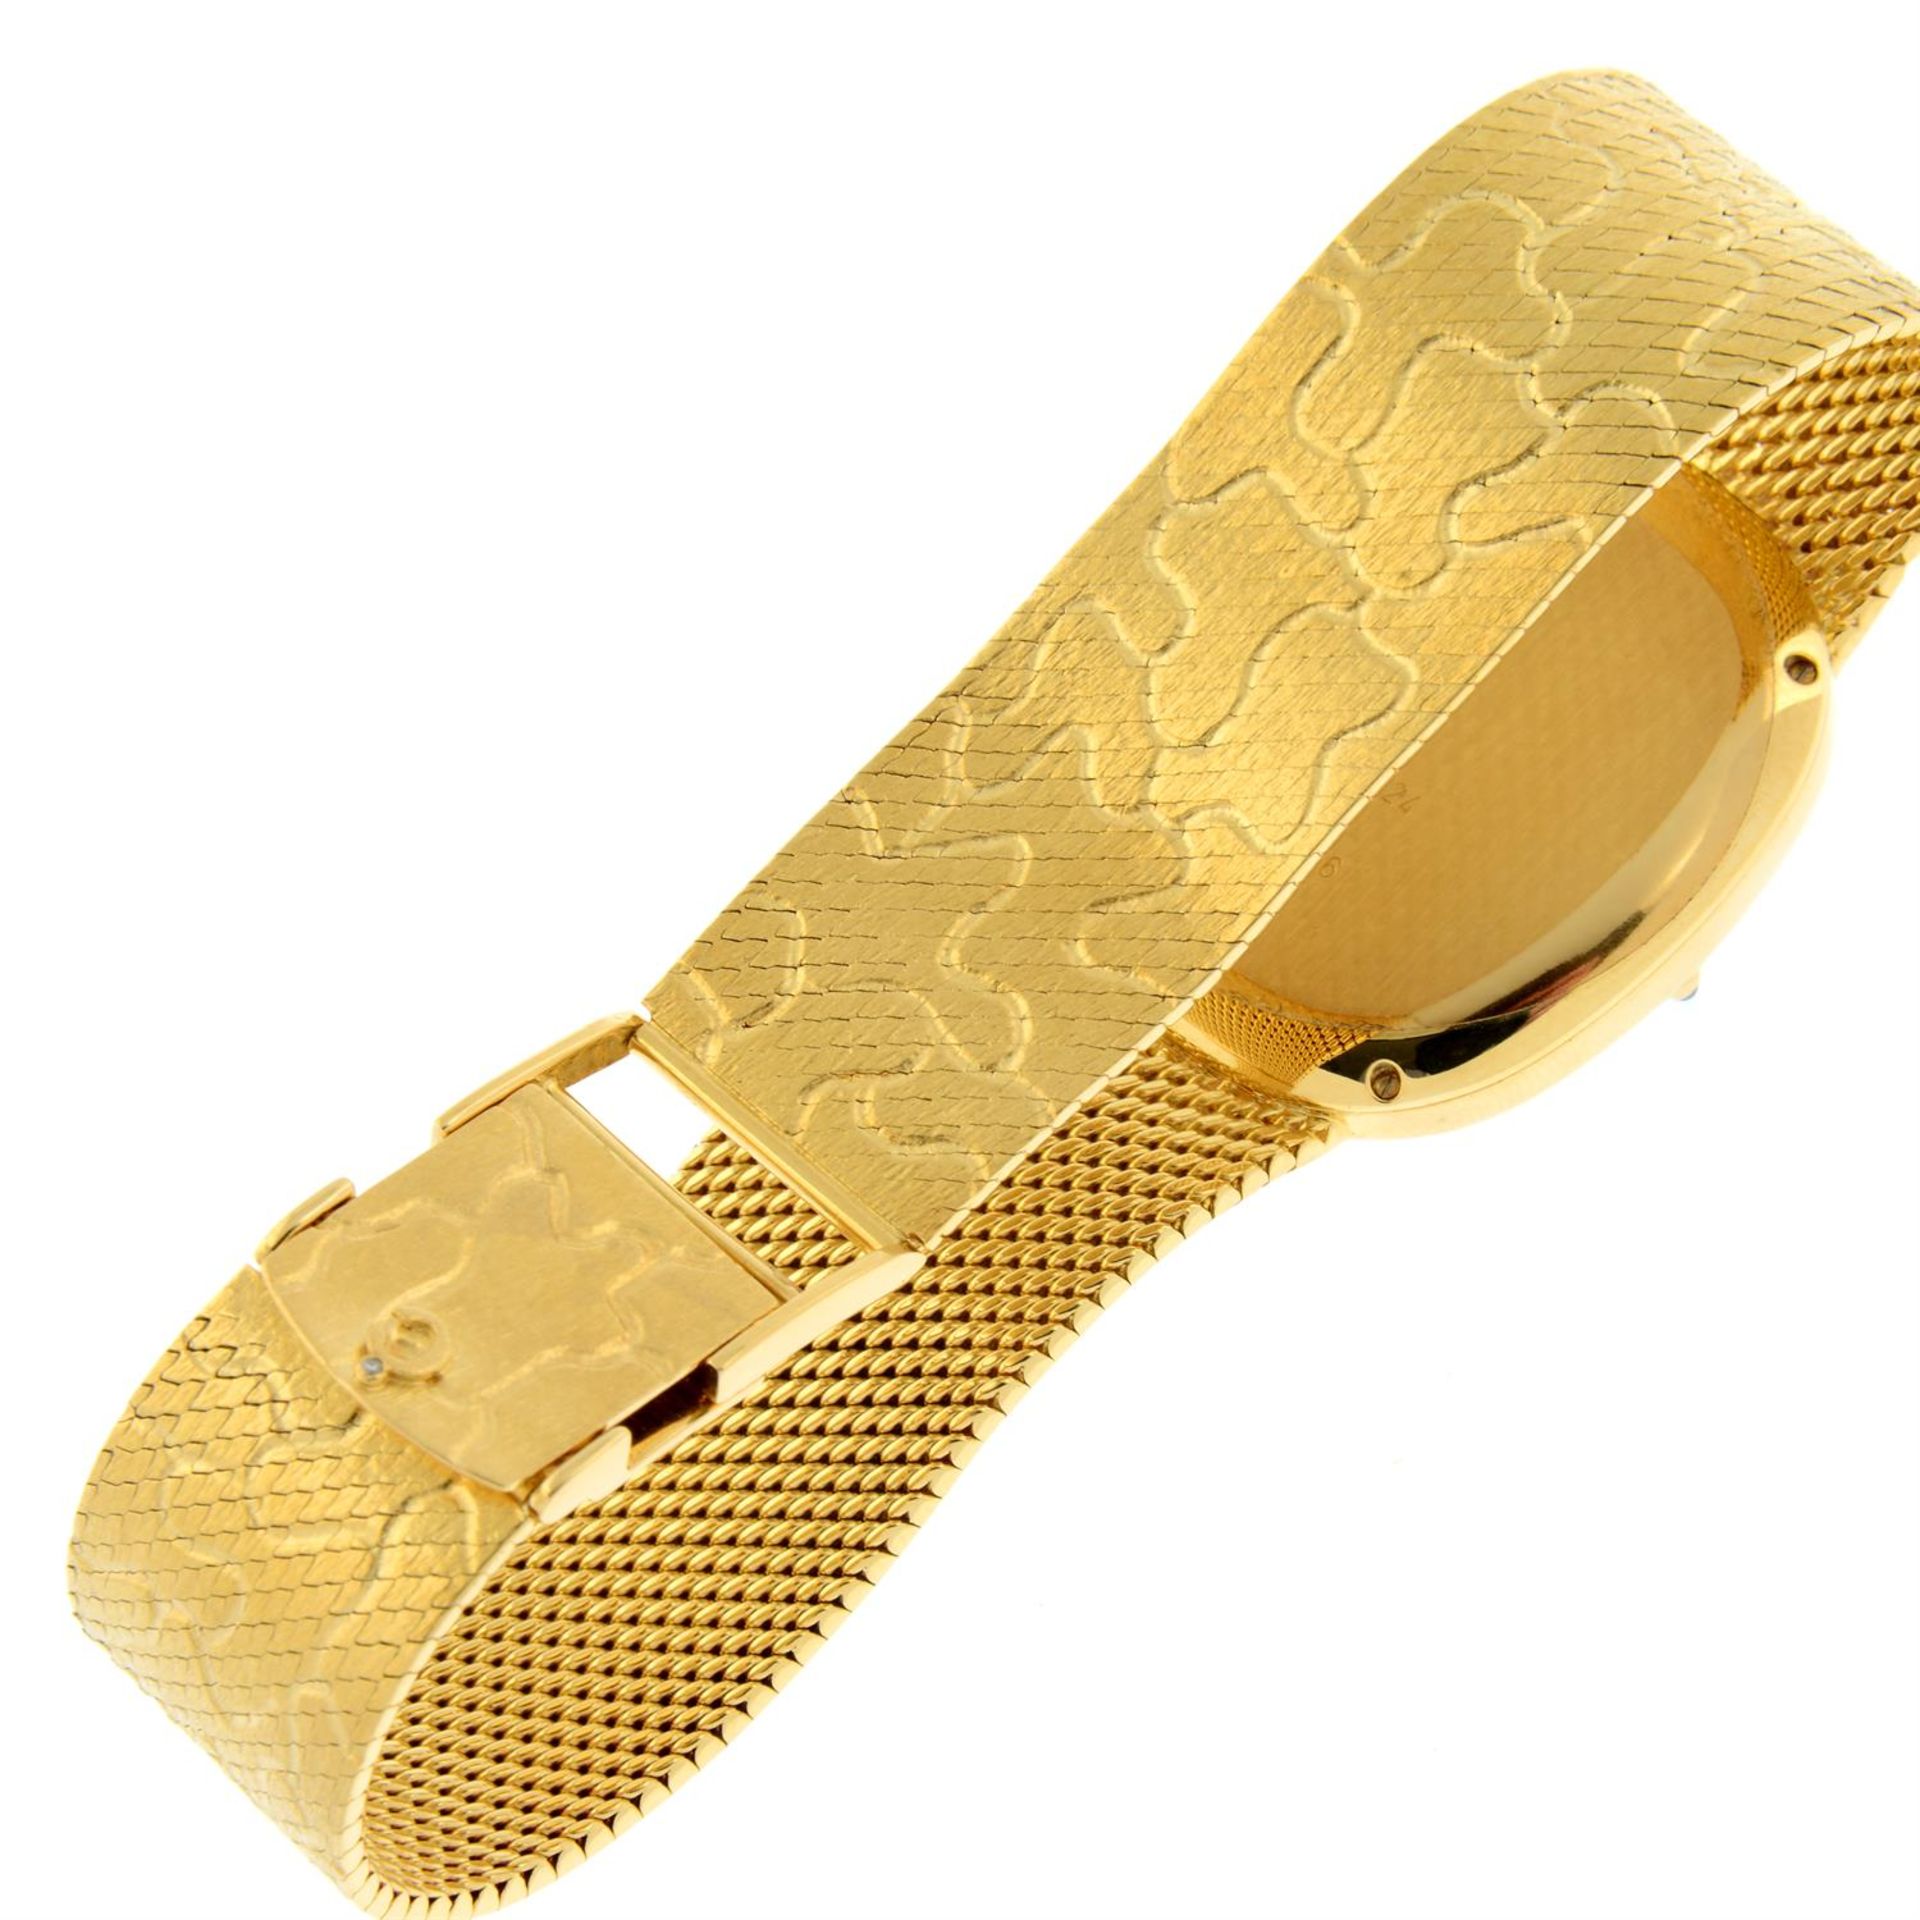 CHOPARD - a yellow metal diamond set bracelet watch, 30mm. - Image 2 of 5